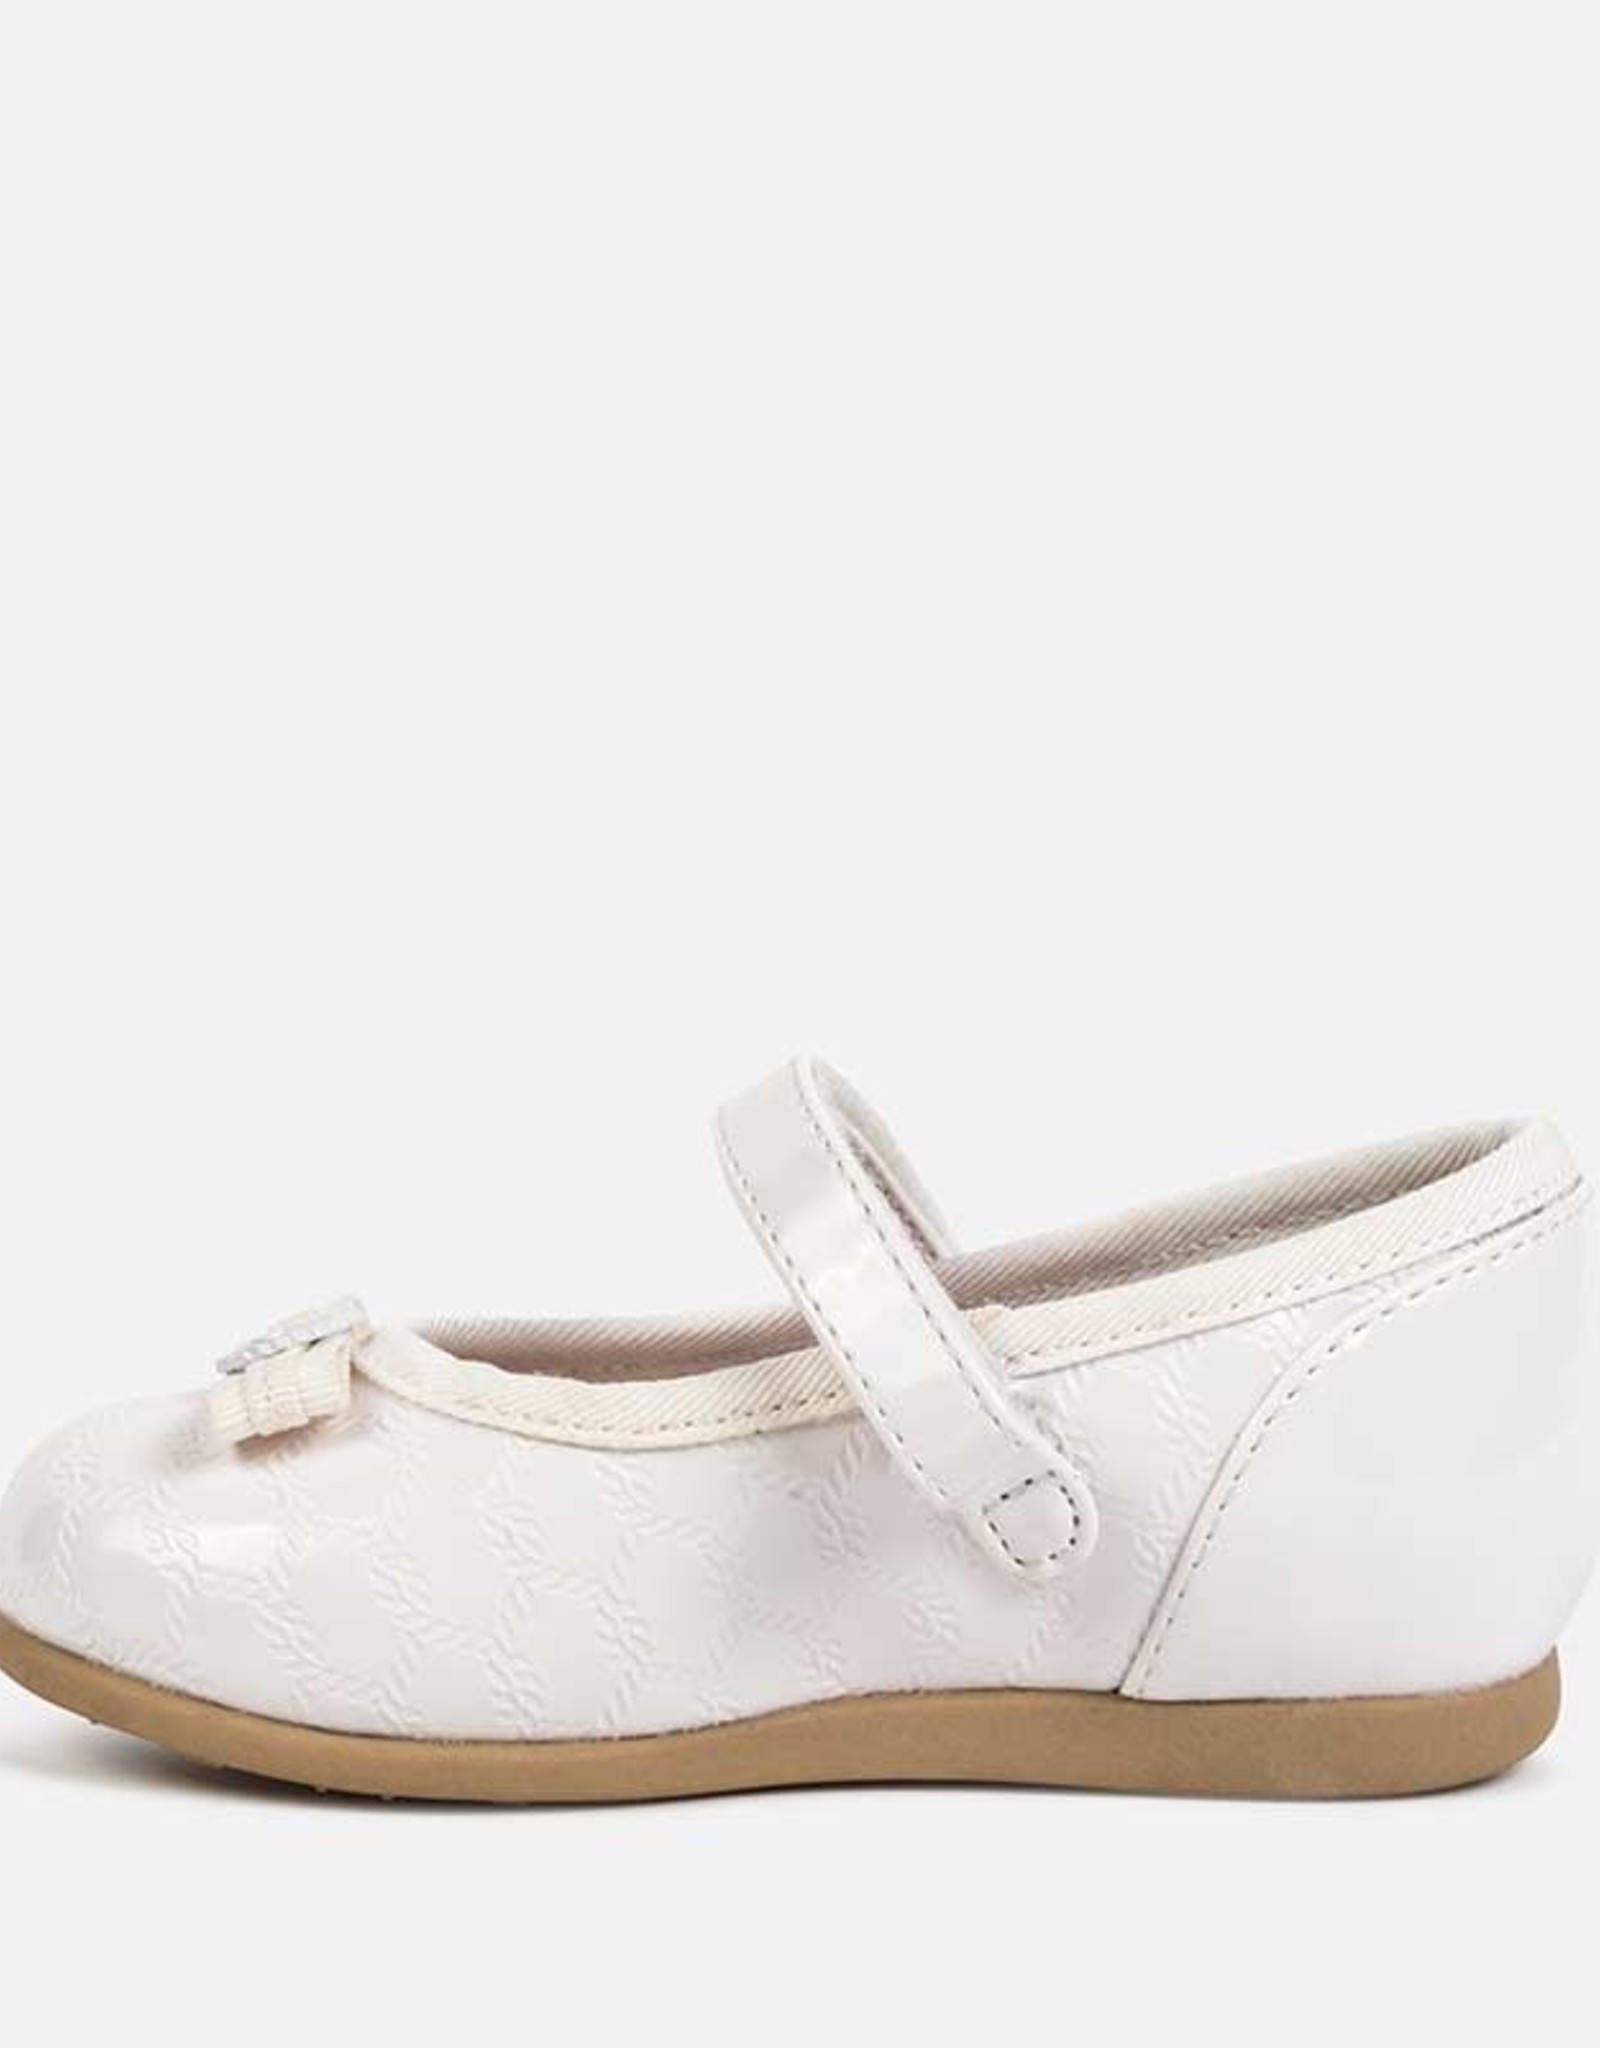 Mayoral Footwear White Mary Jane